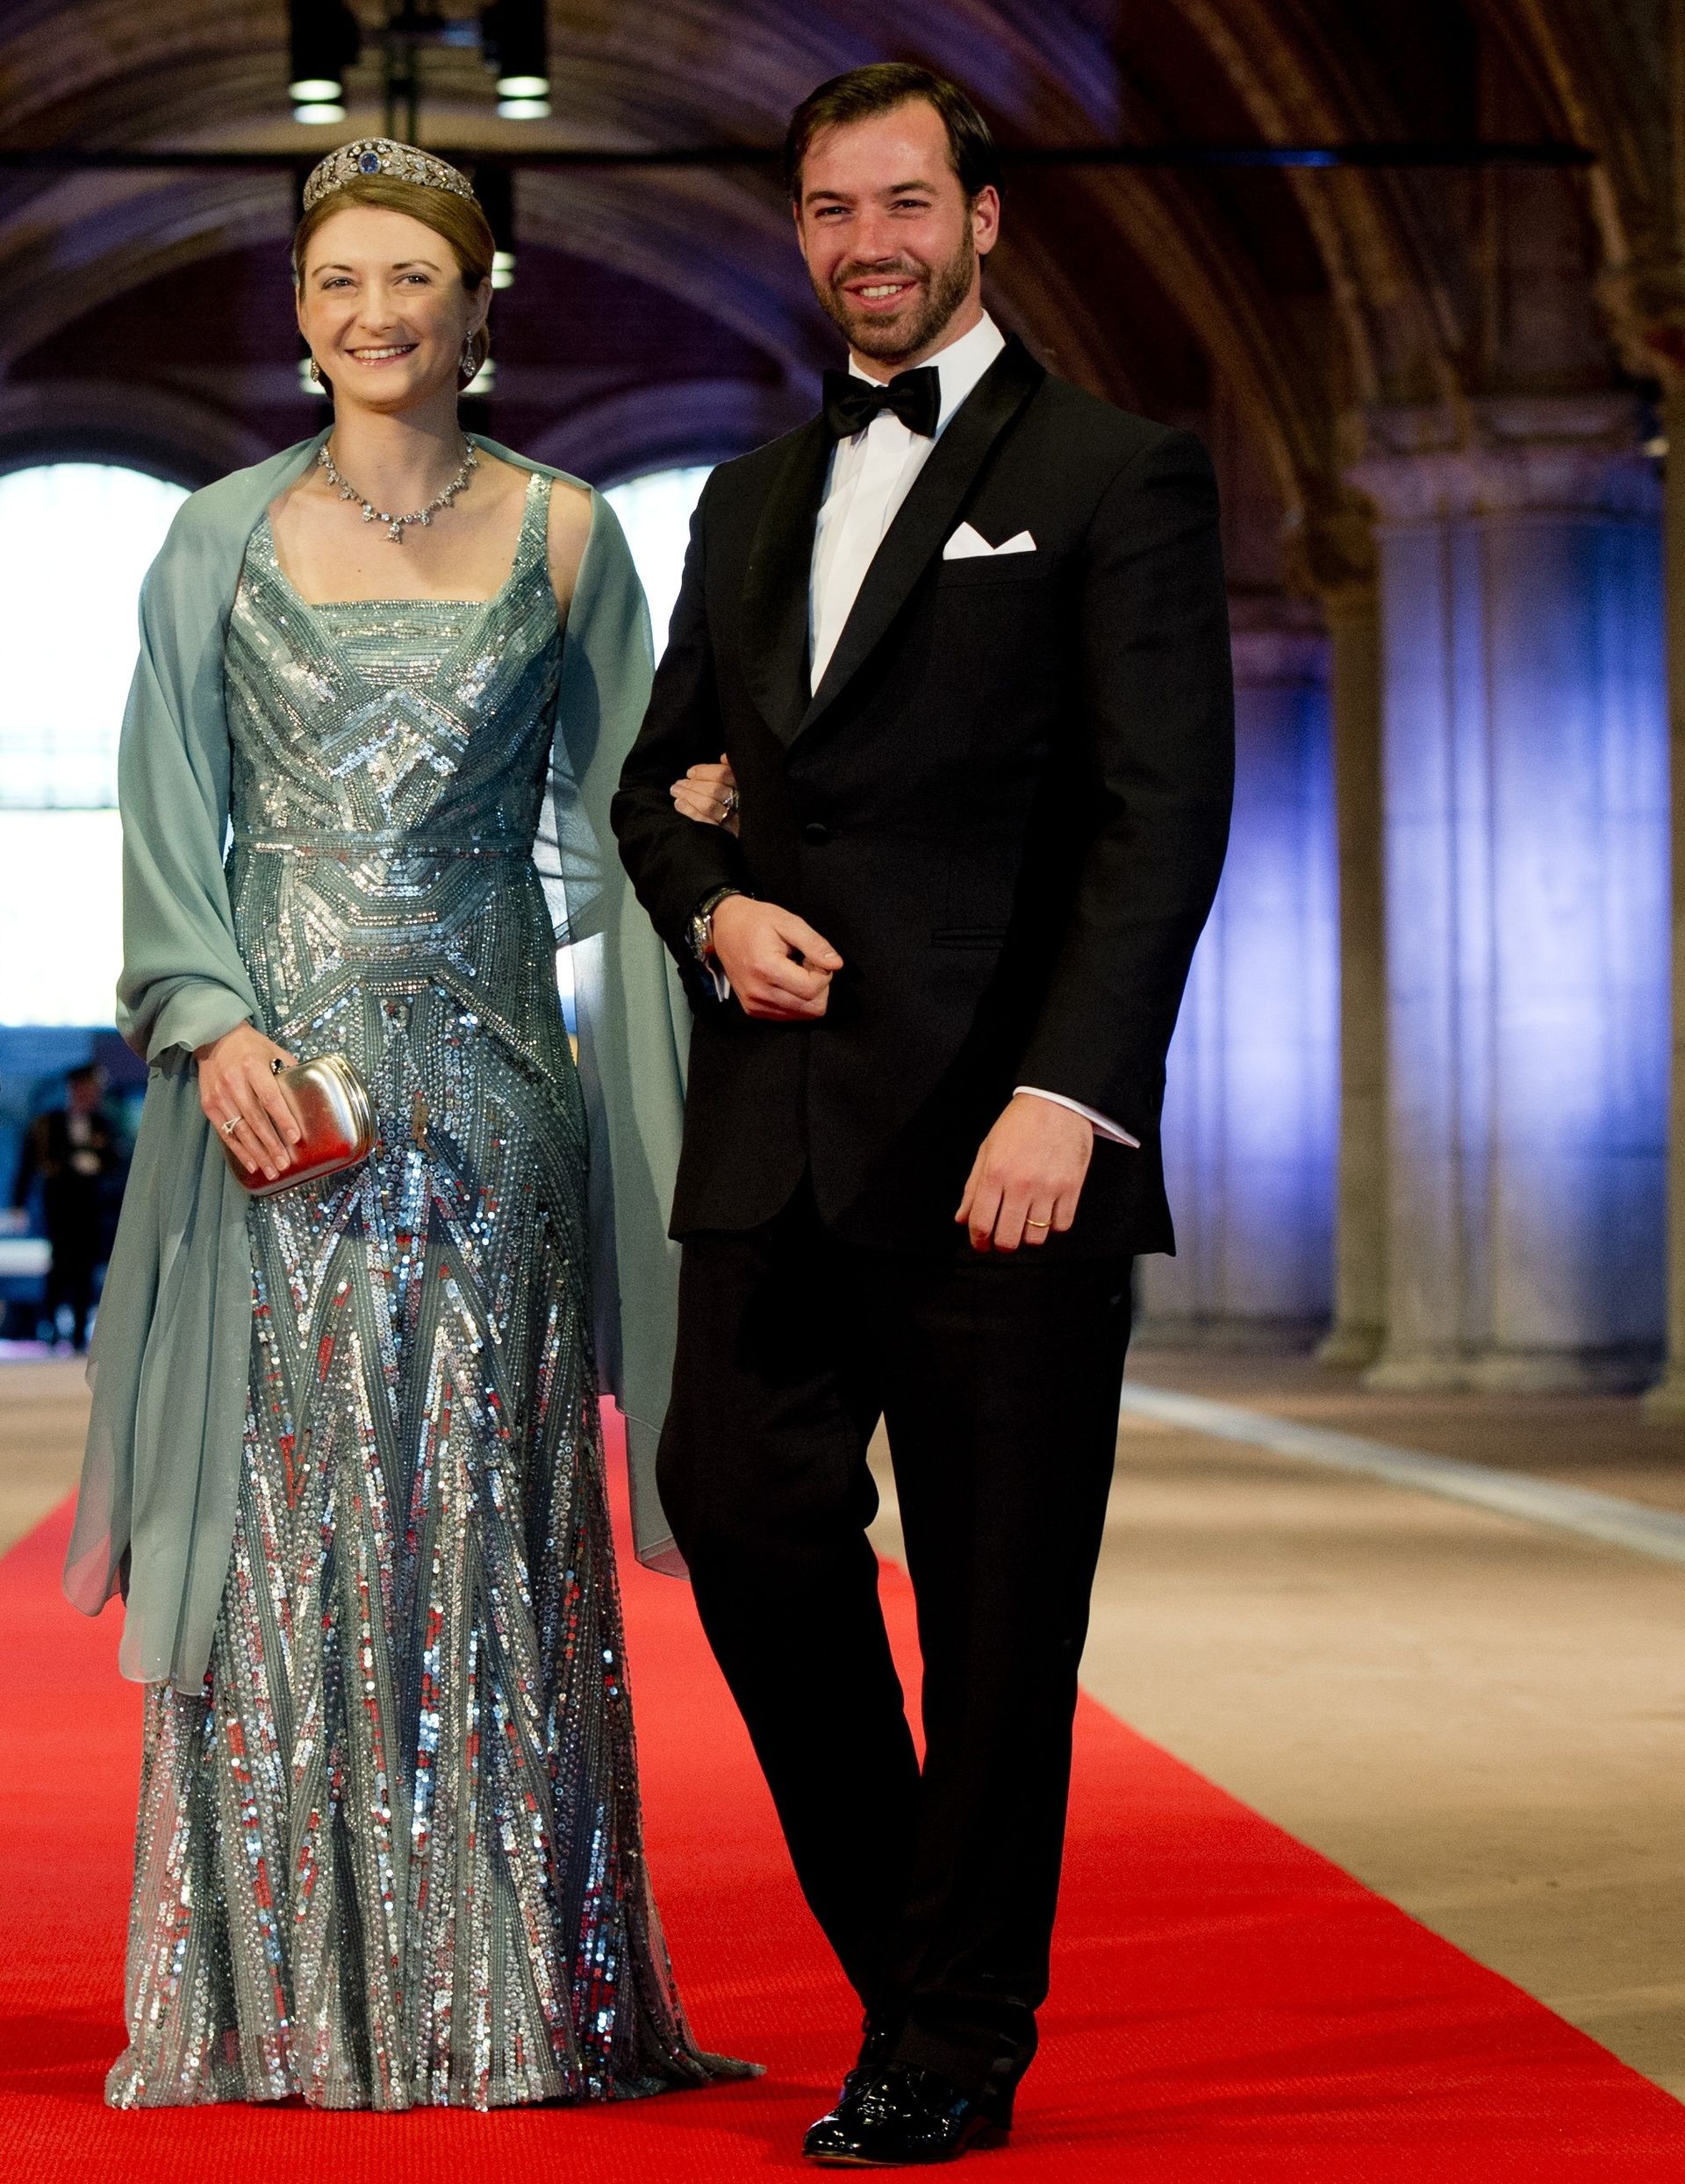 Guillaume-en-Stephanie-aan-vooravond-aftreden-koningin-Beatrix